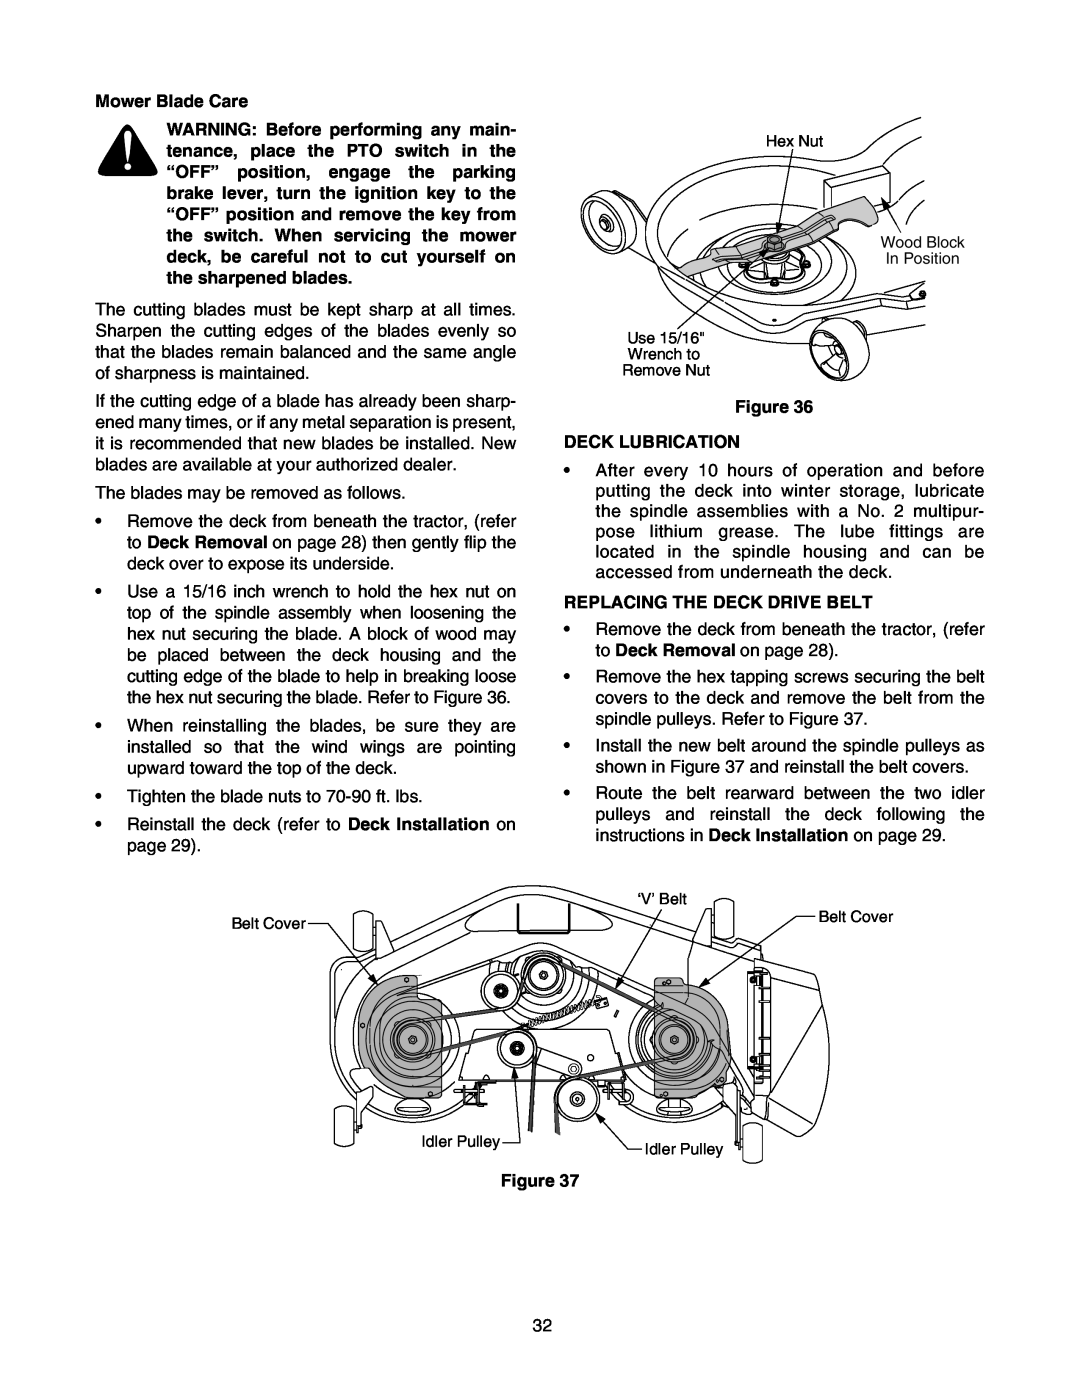 Troy-Bilt RZT 50 manual Mower Blade Care, Figure DECK LUBRICATION, Replacing The Deck Drive Belt 